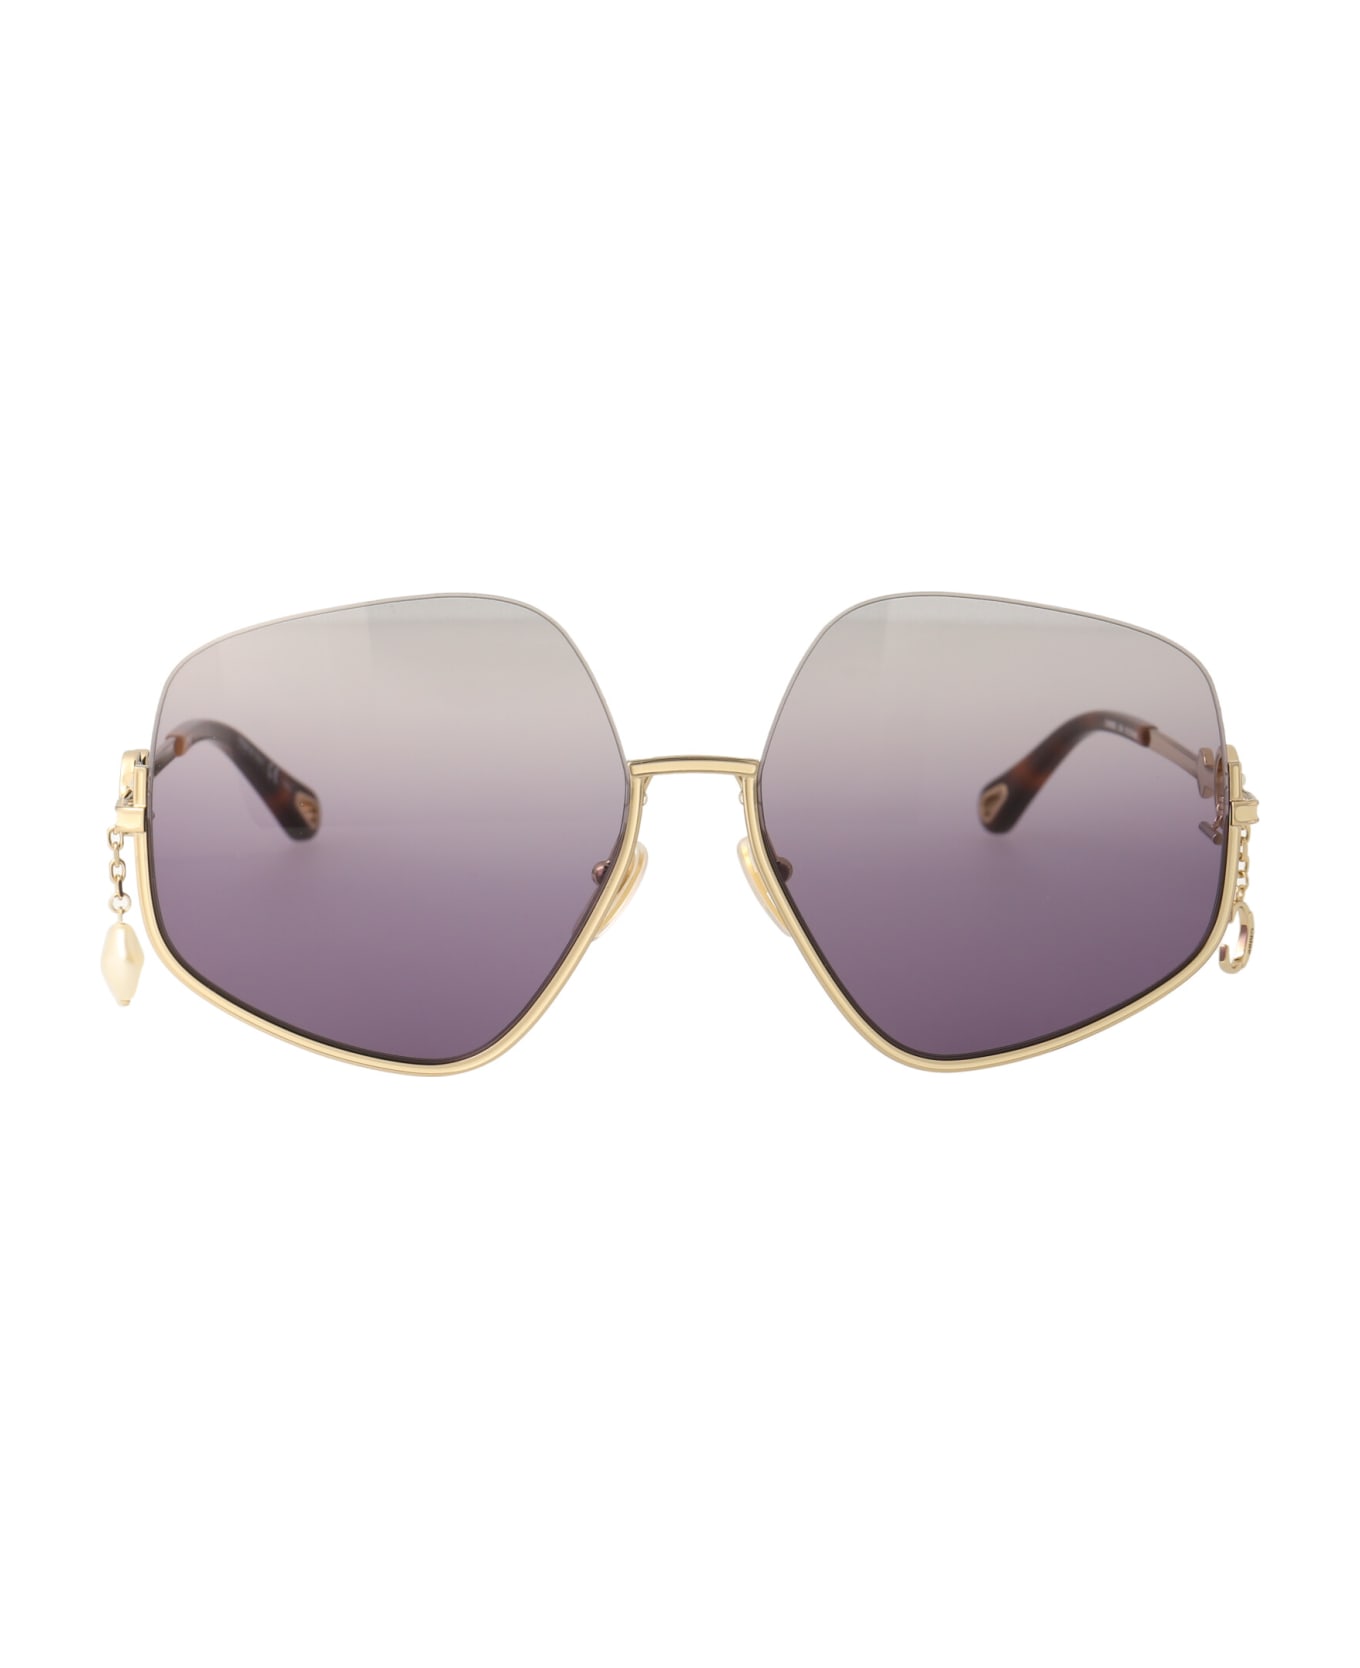 Chloé Eyewear Ch0068s Sunglasses - 004 GOLD GOLD VIOLET